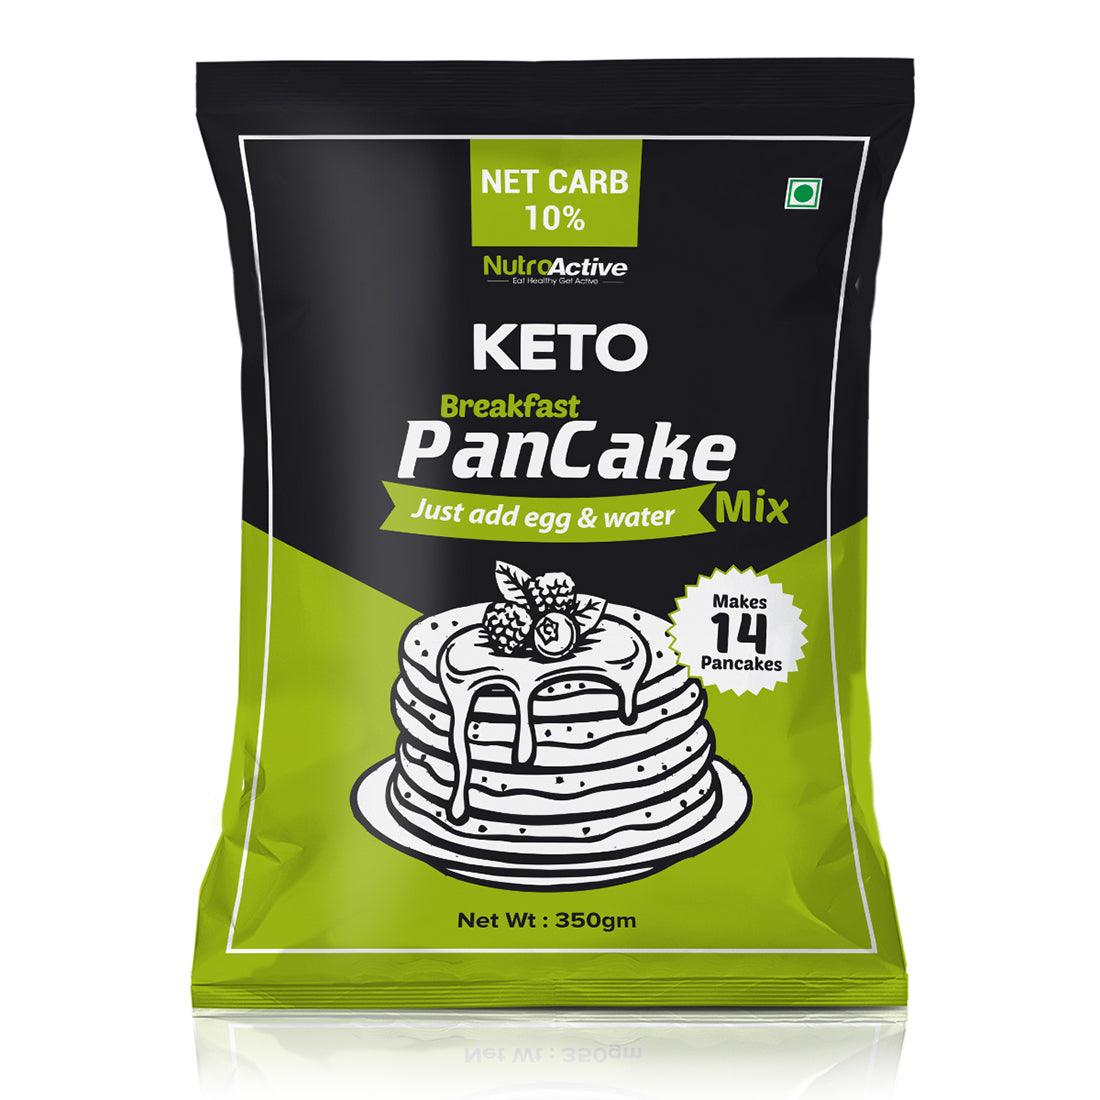 NutroActive Keto Breakfast Pancake Mix Low Carbs High Protein Gluten Free - 350gm - Diabexy